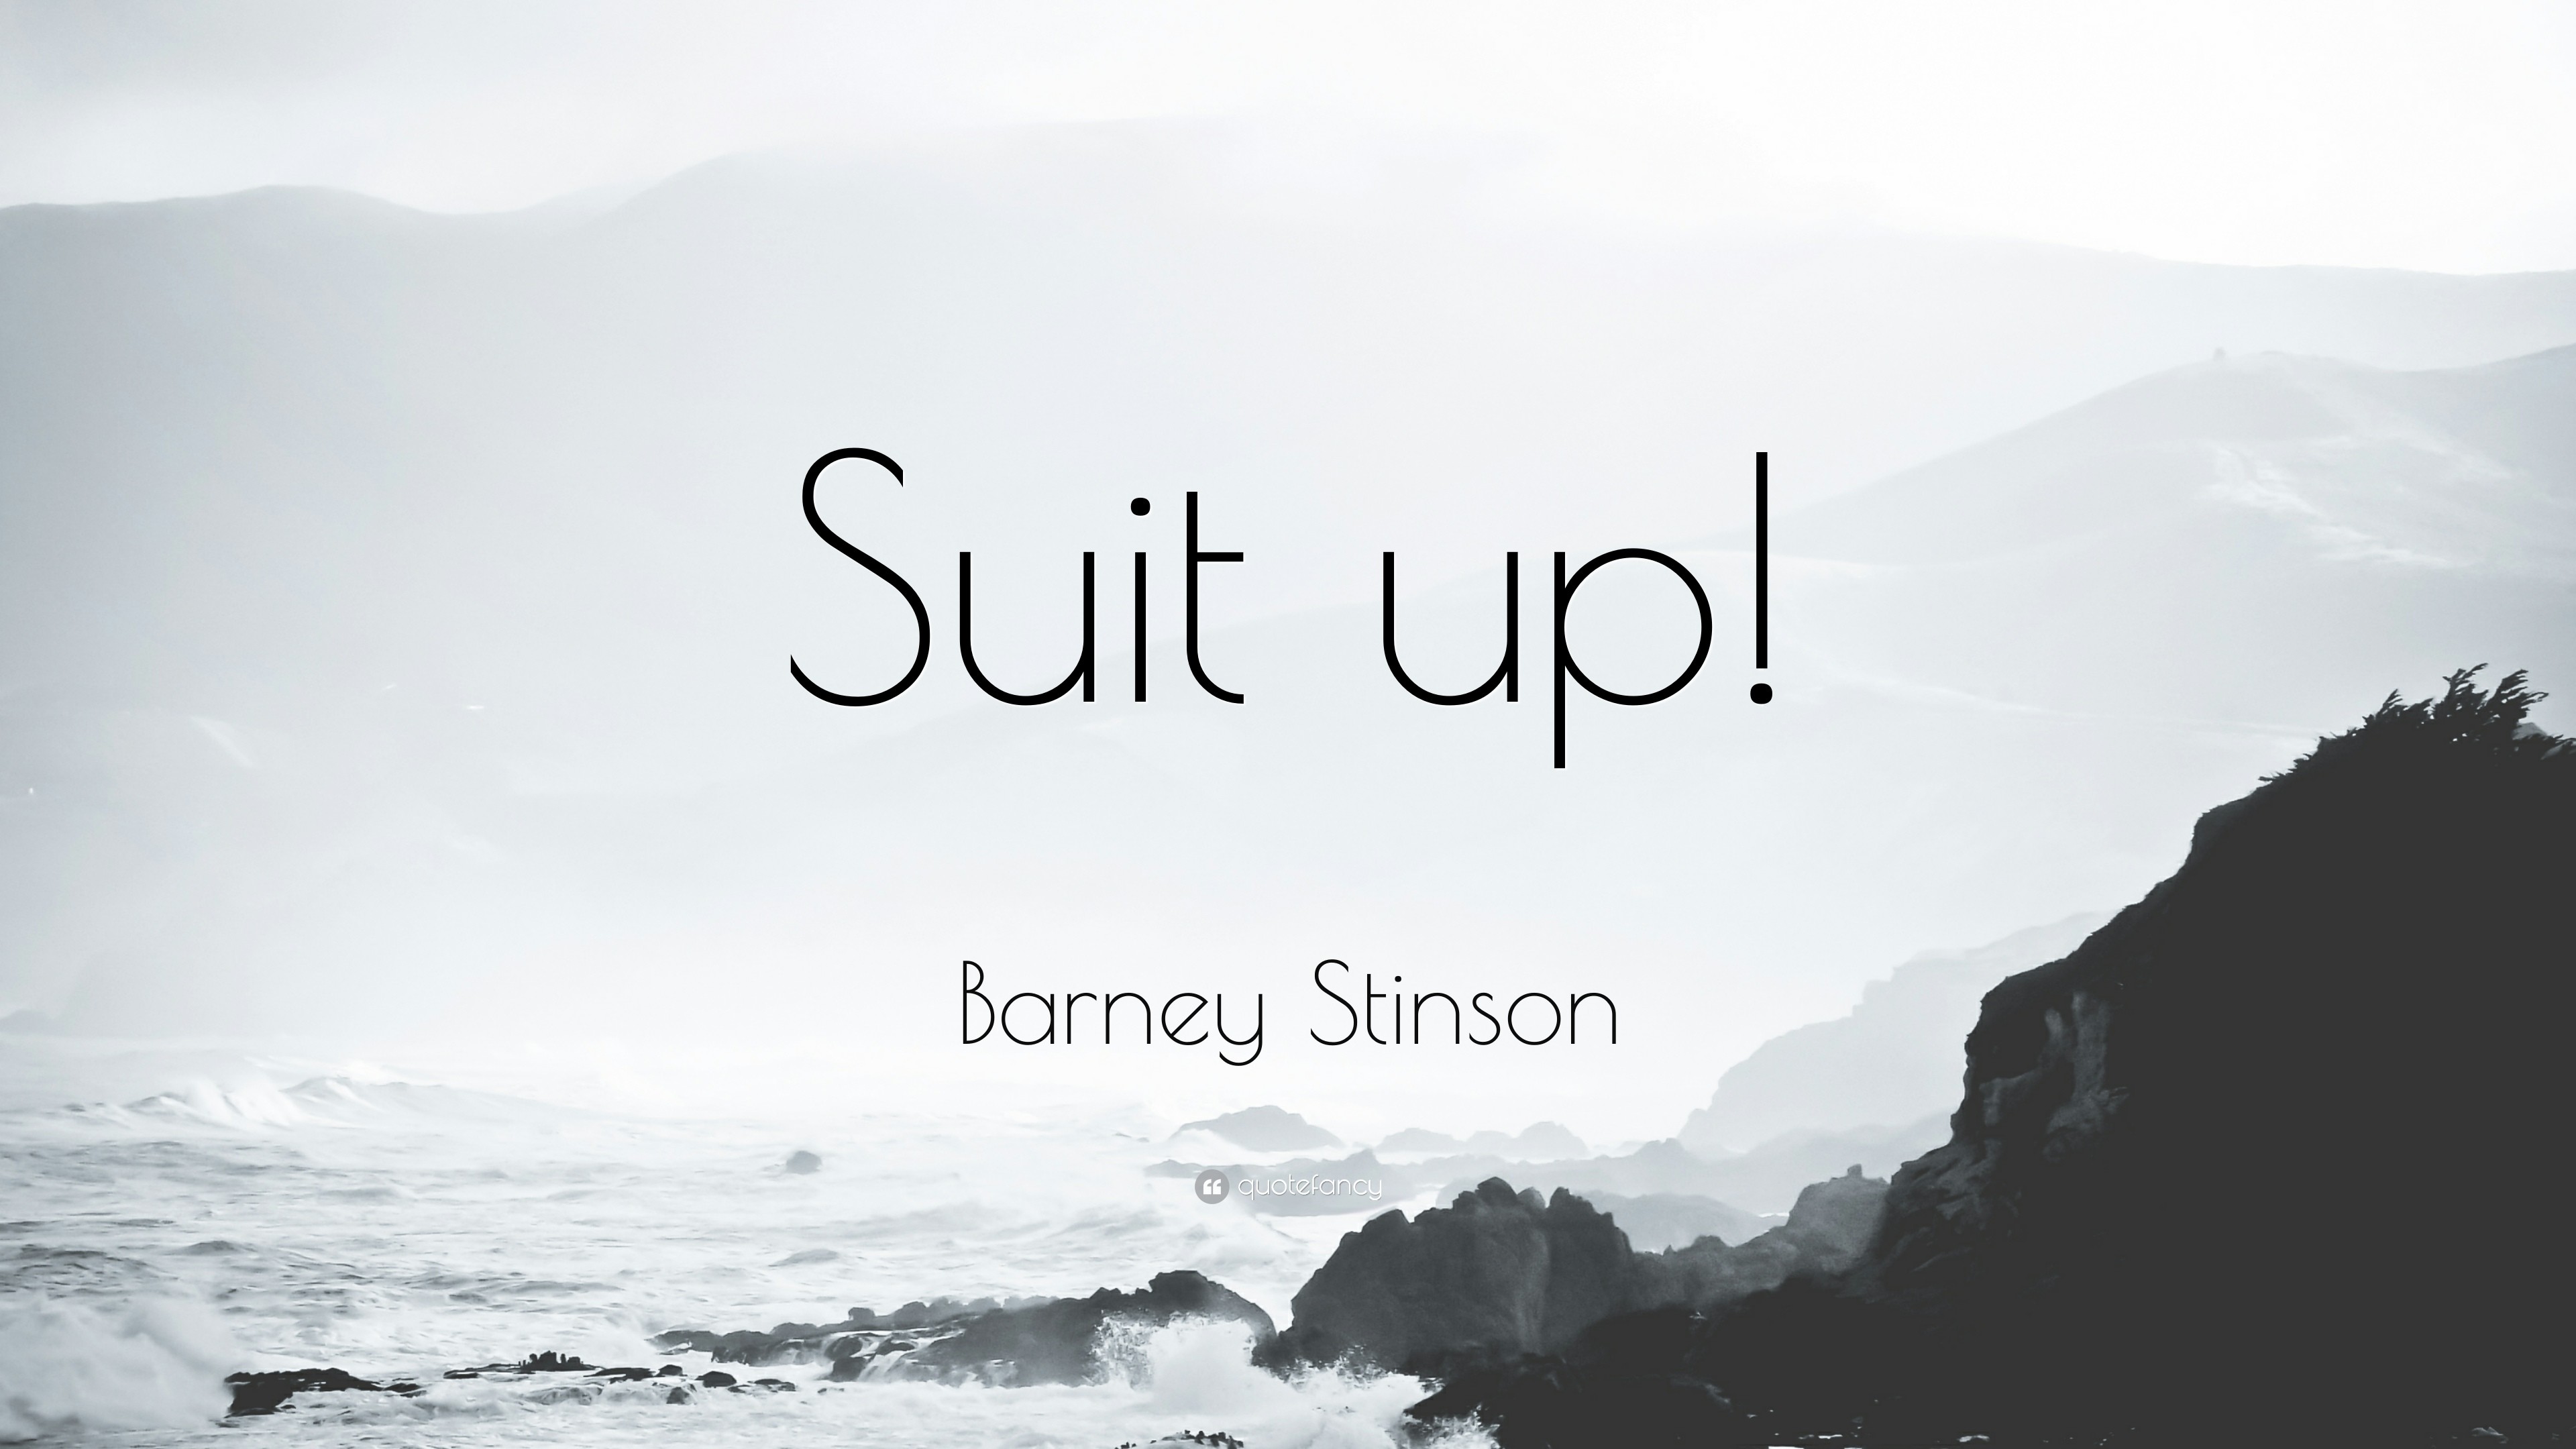 3840x2160 Barney Stinson Quote: “Suit up!”